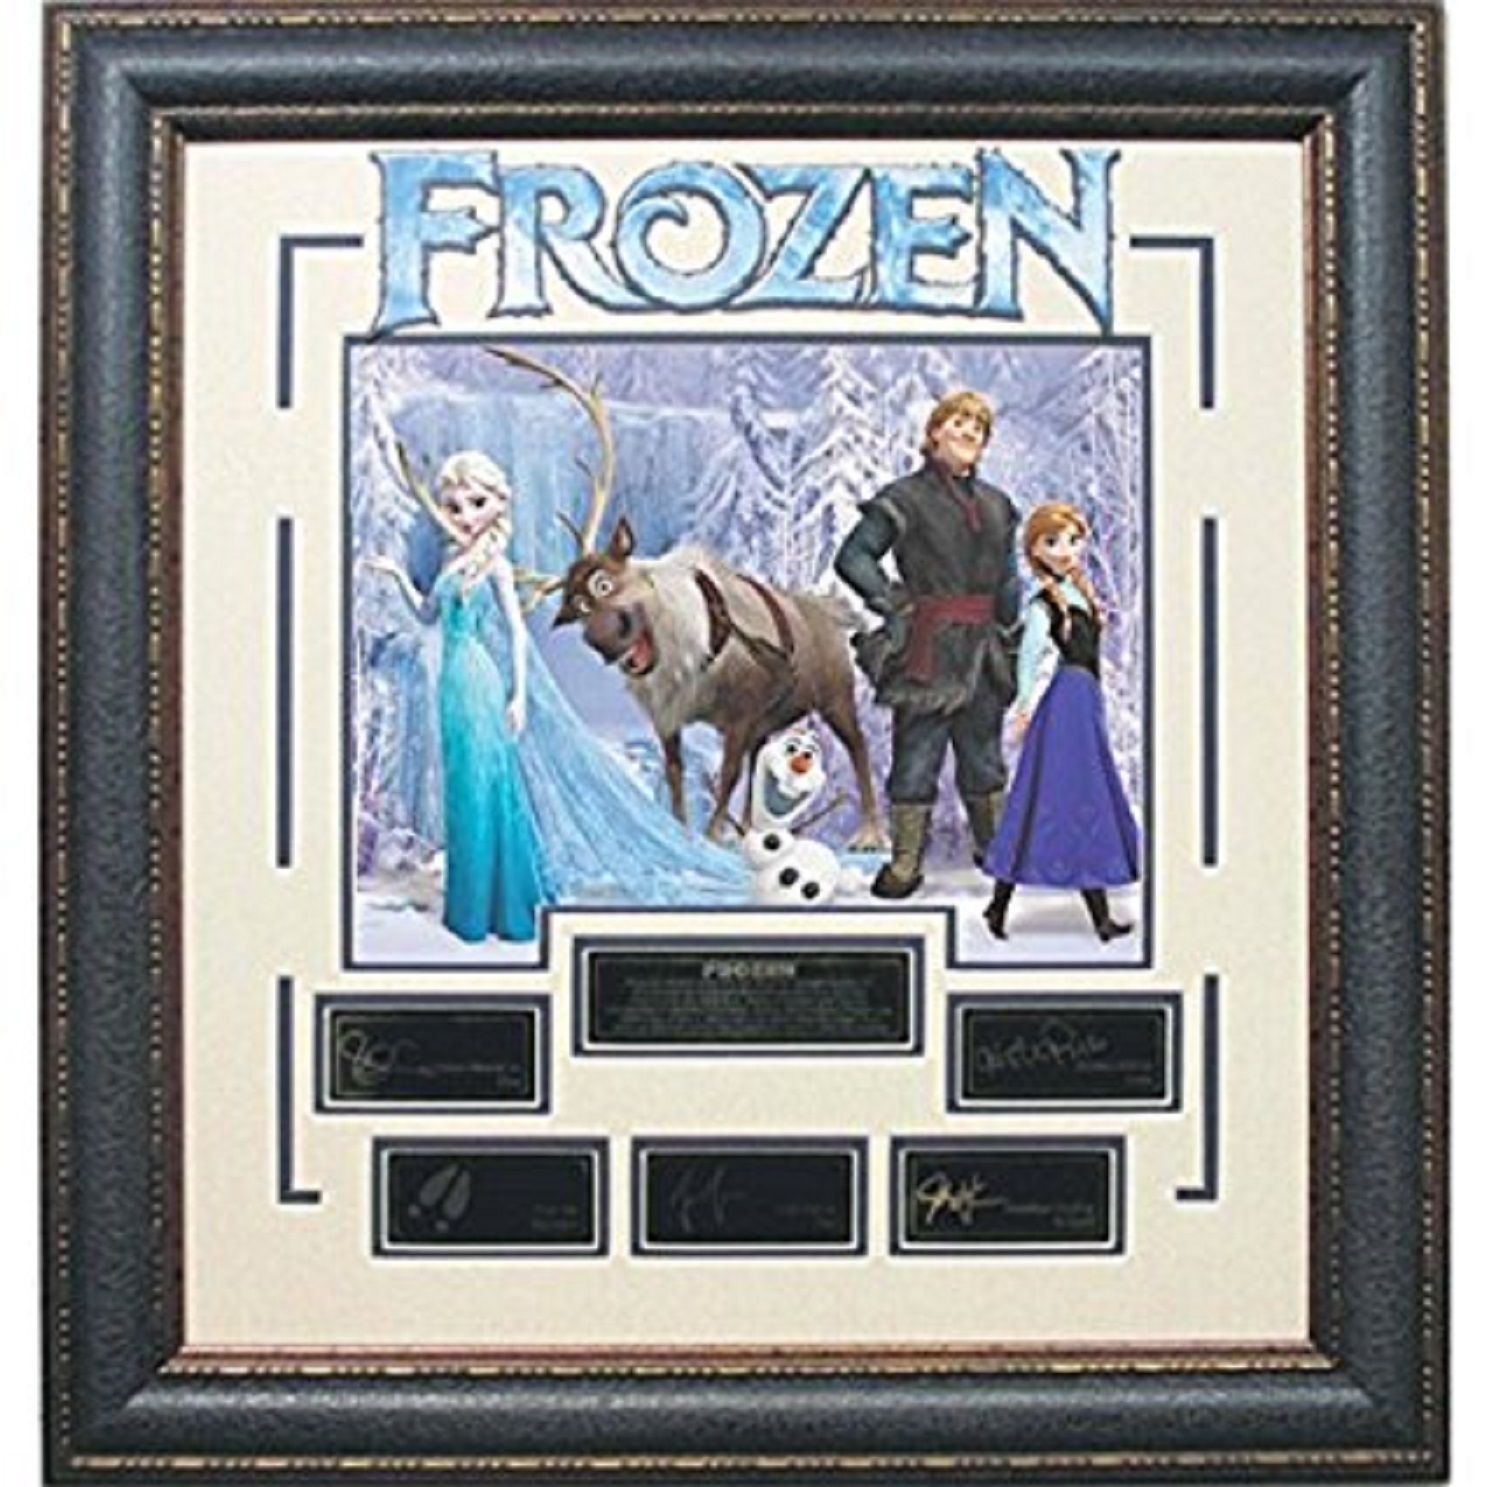 Disney Frozen cast facsimile signed Photo Collage Elsa Anna framed 24×26